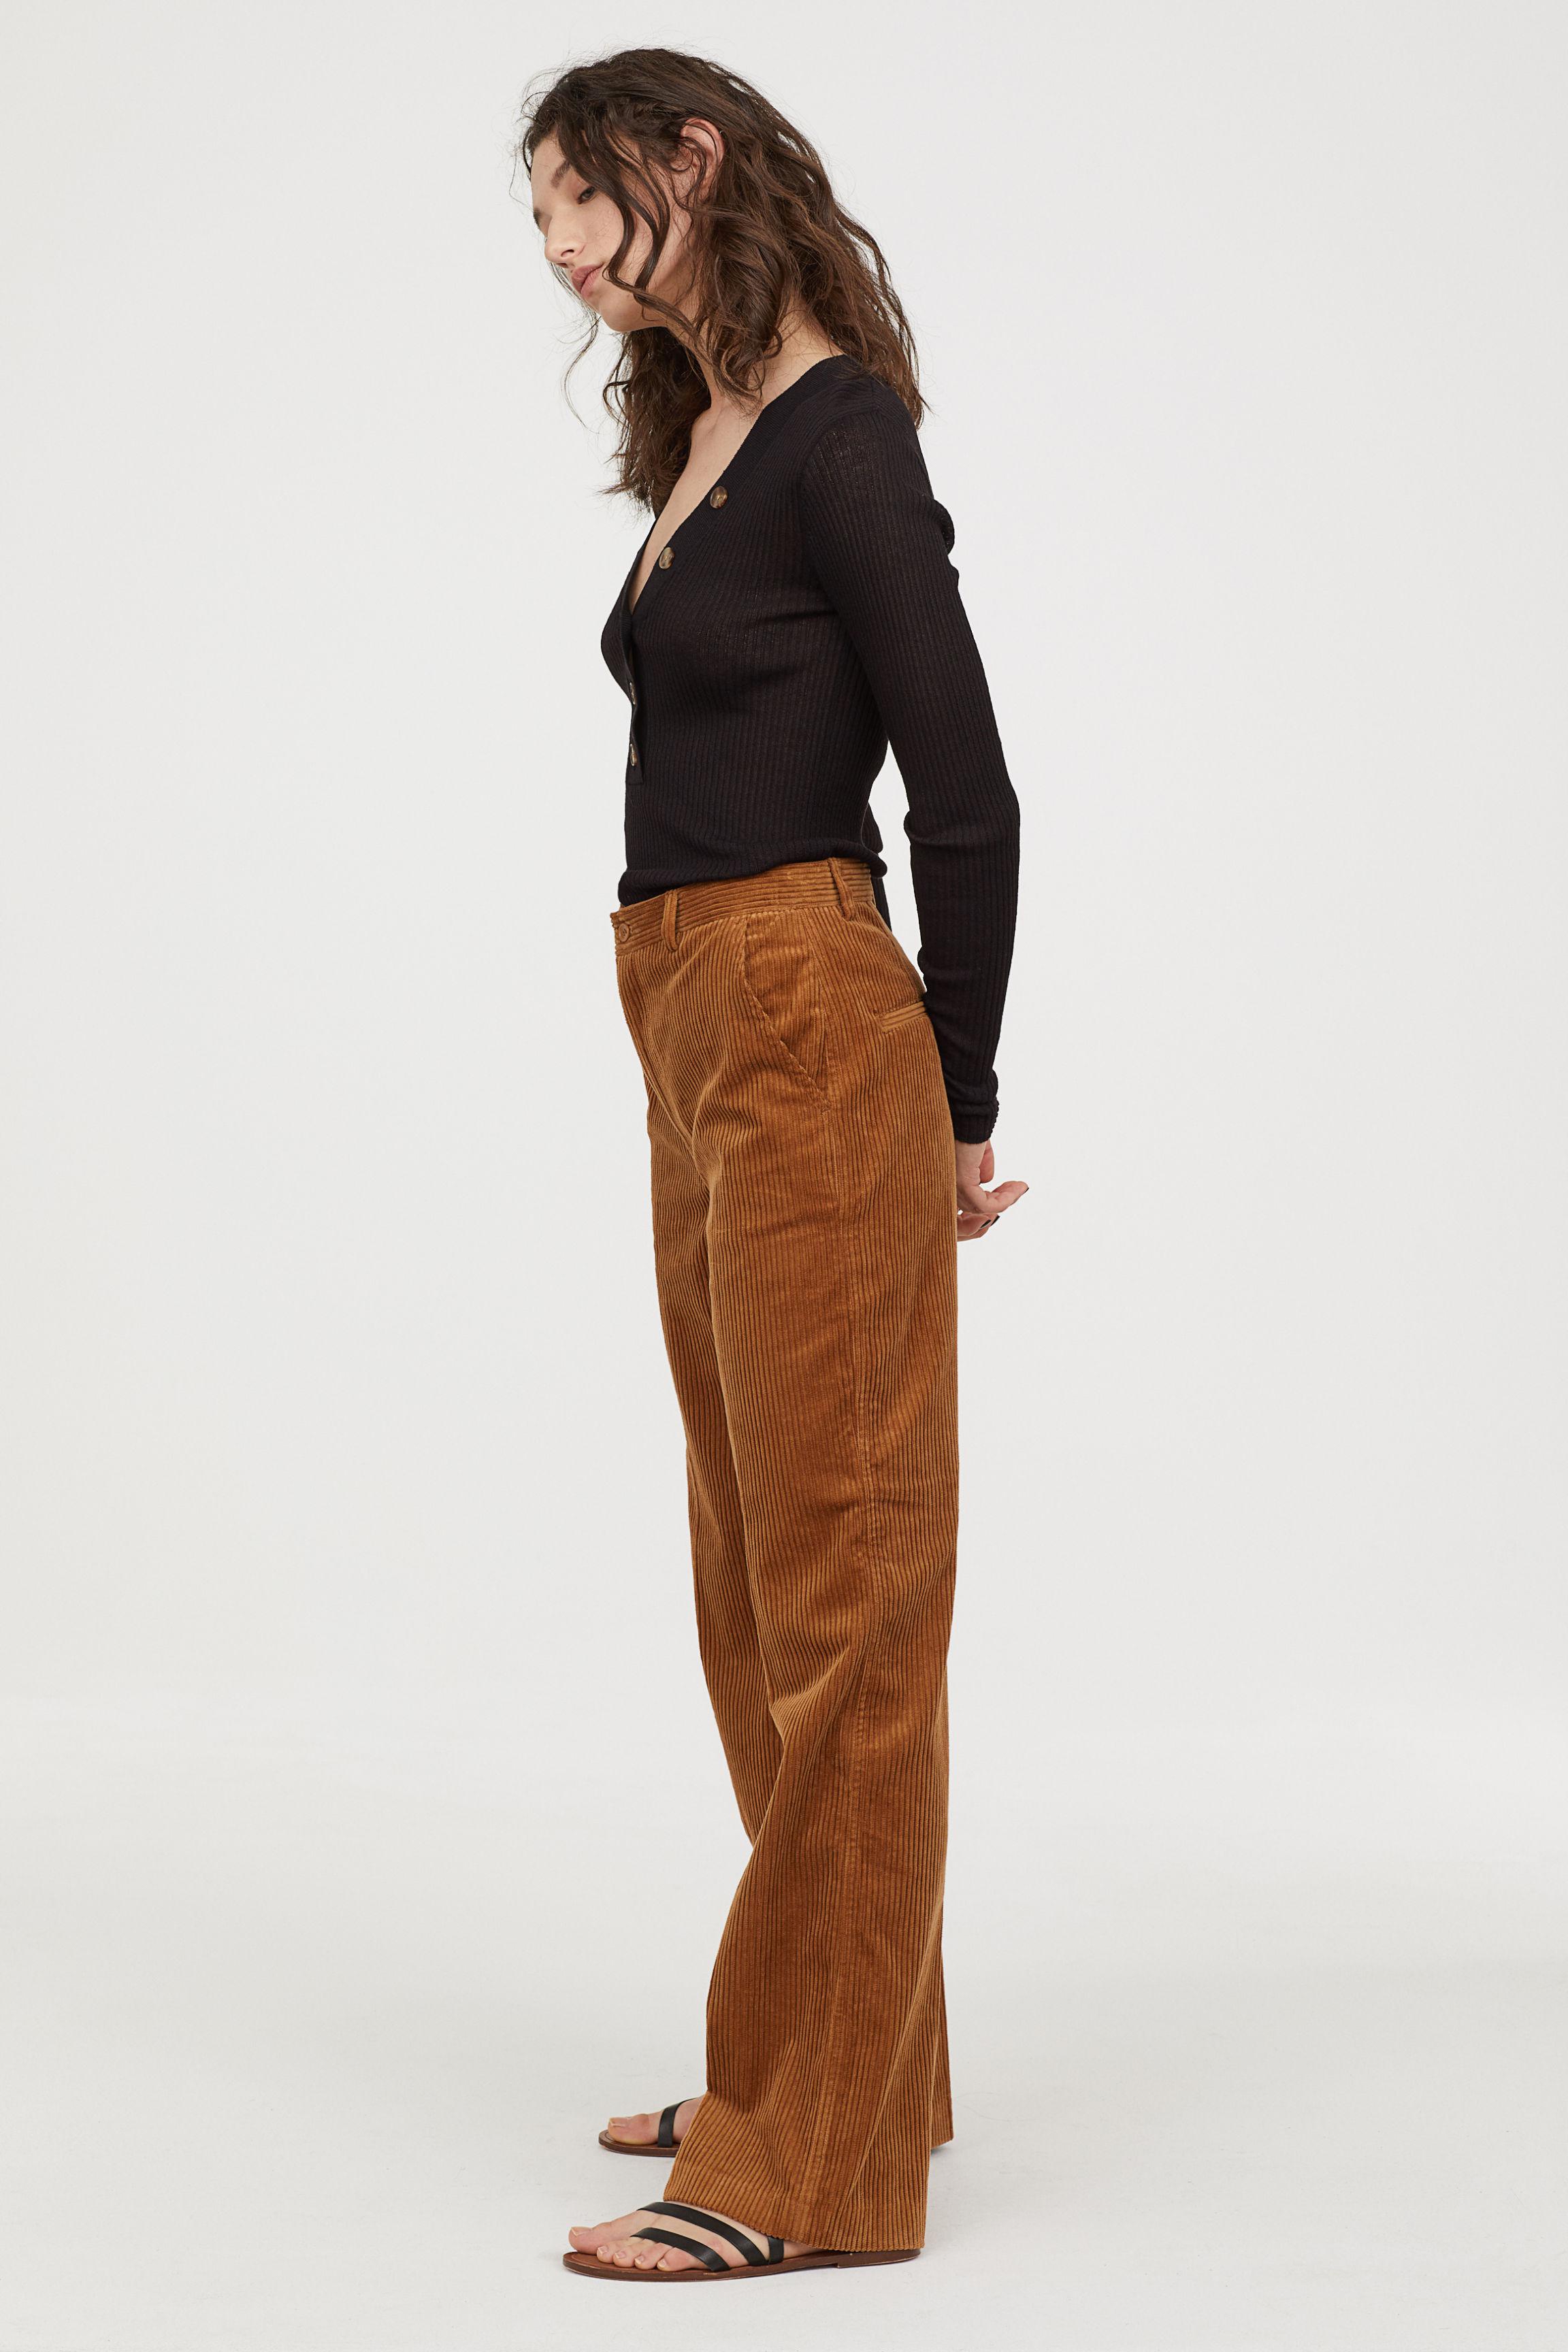 H&M Cotton Wide-leg Corduroy Pants in Light Brown (Brown) - Lyst